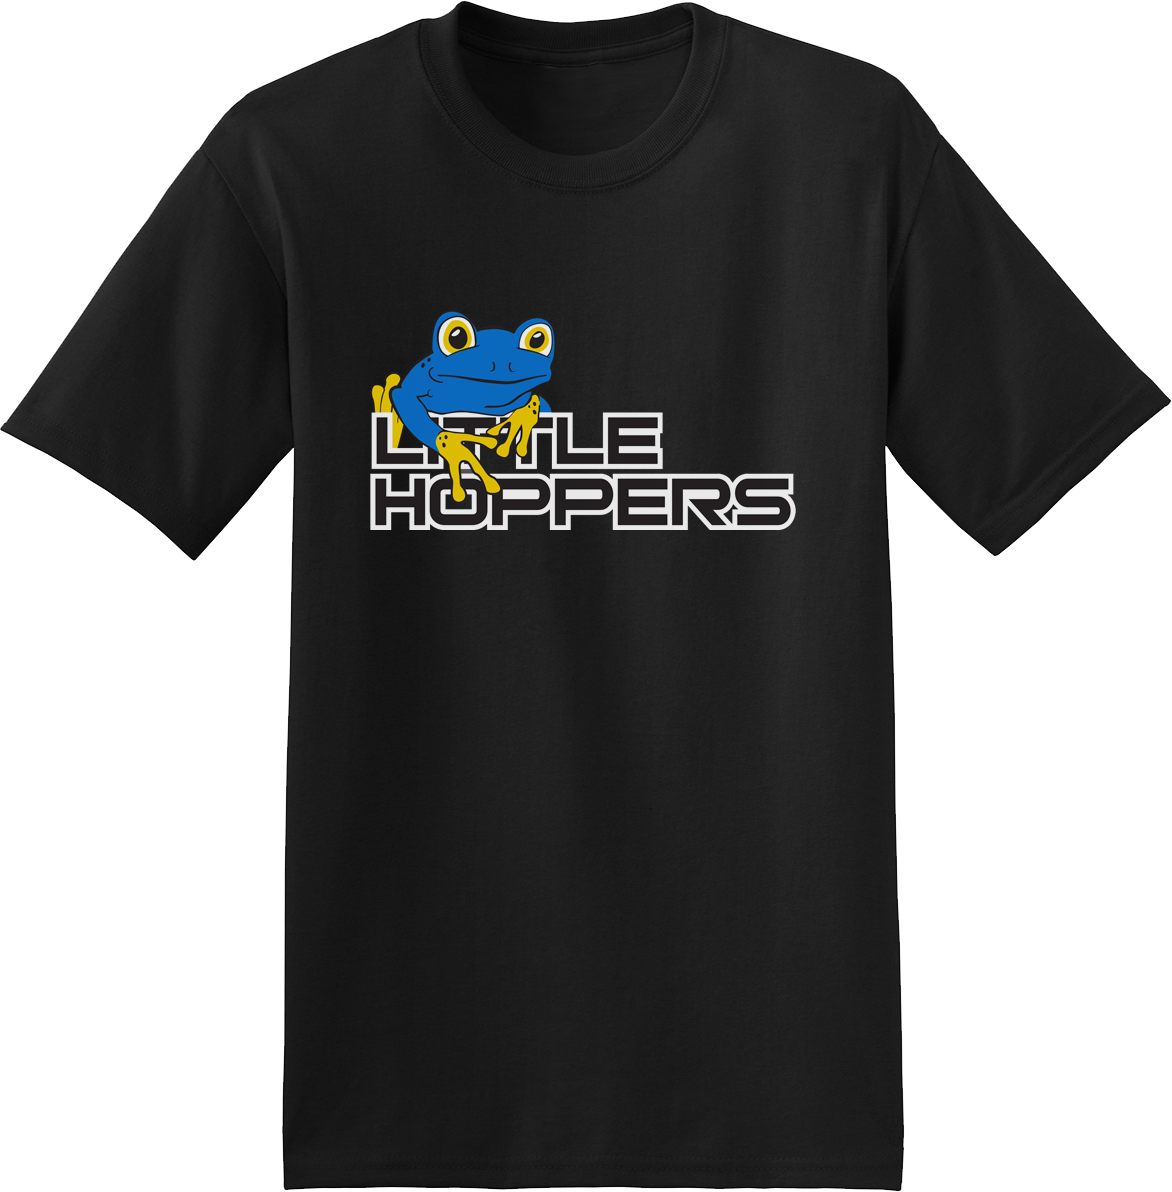 Little Hoppers Black T-Shirt